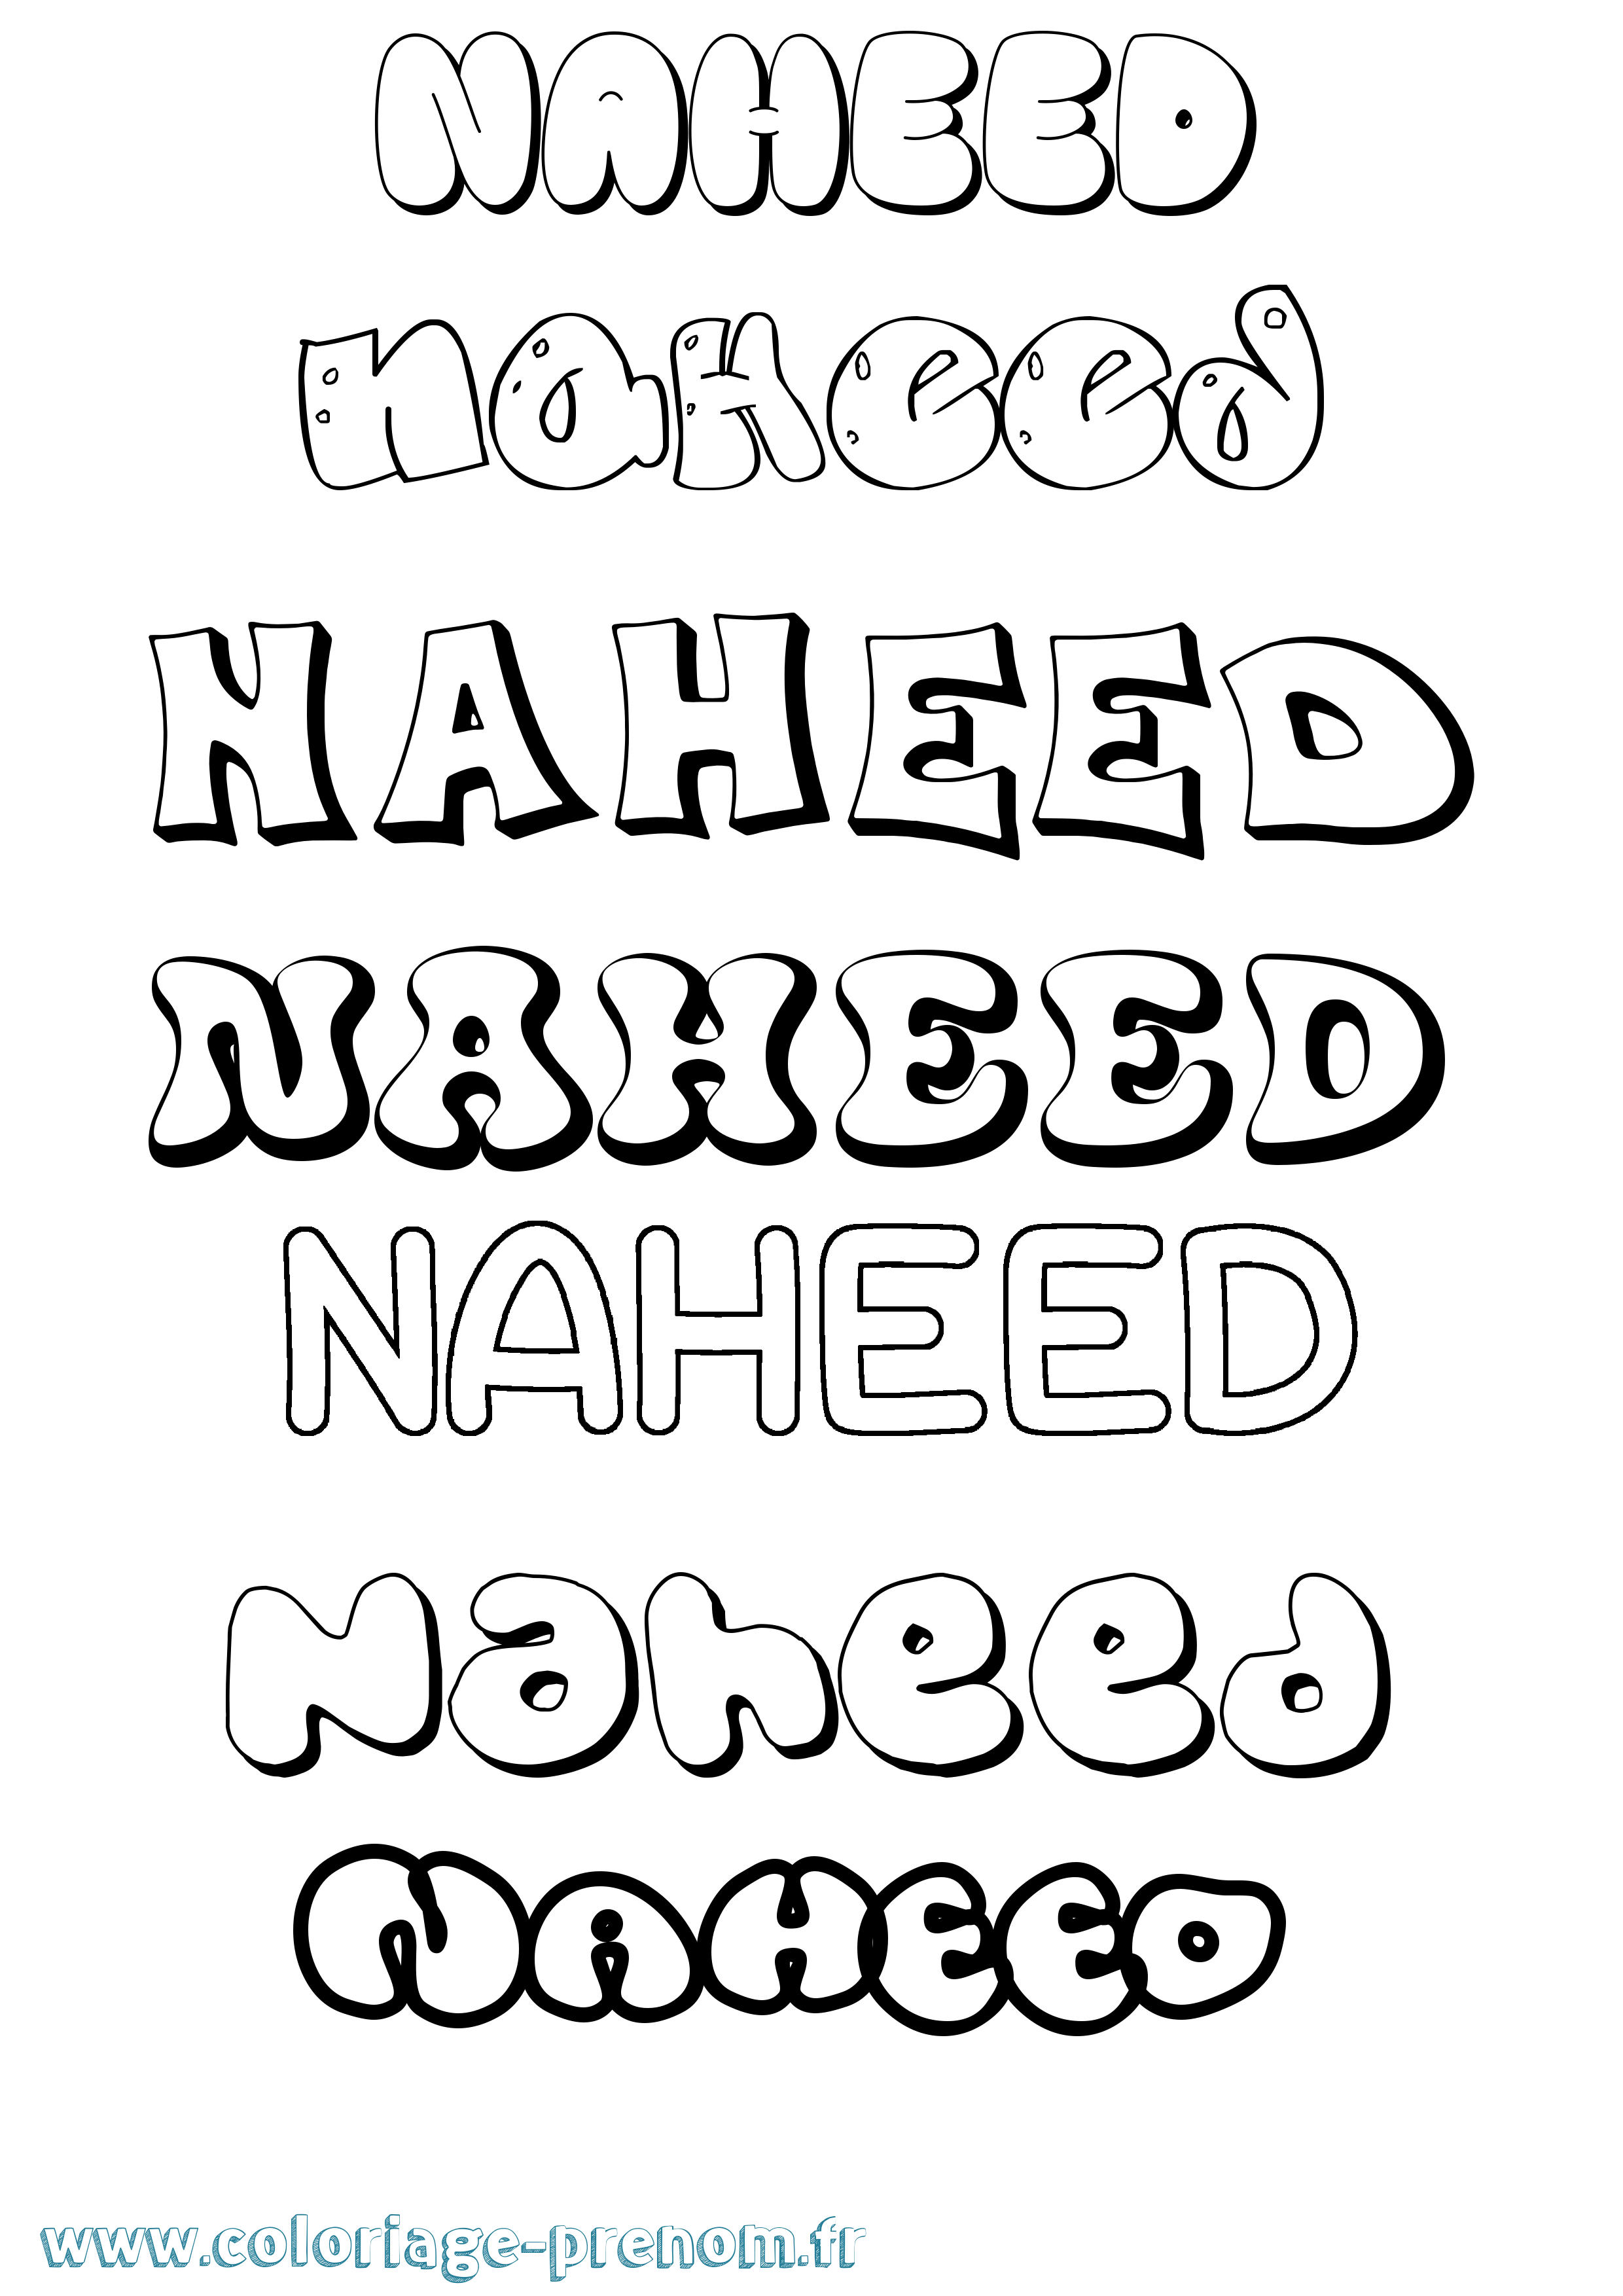 Coloriage prénom Naheed Bubble